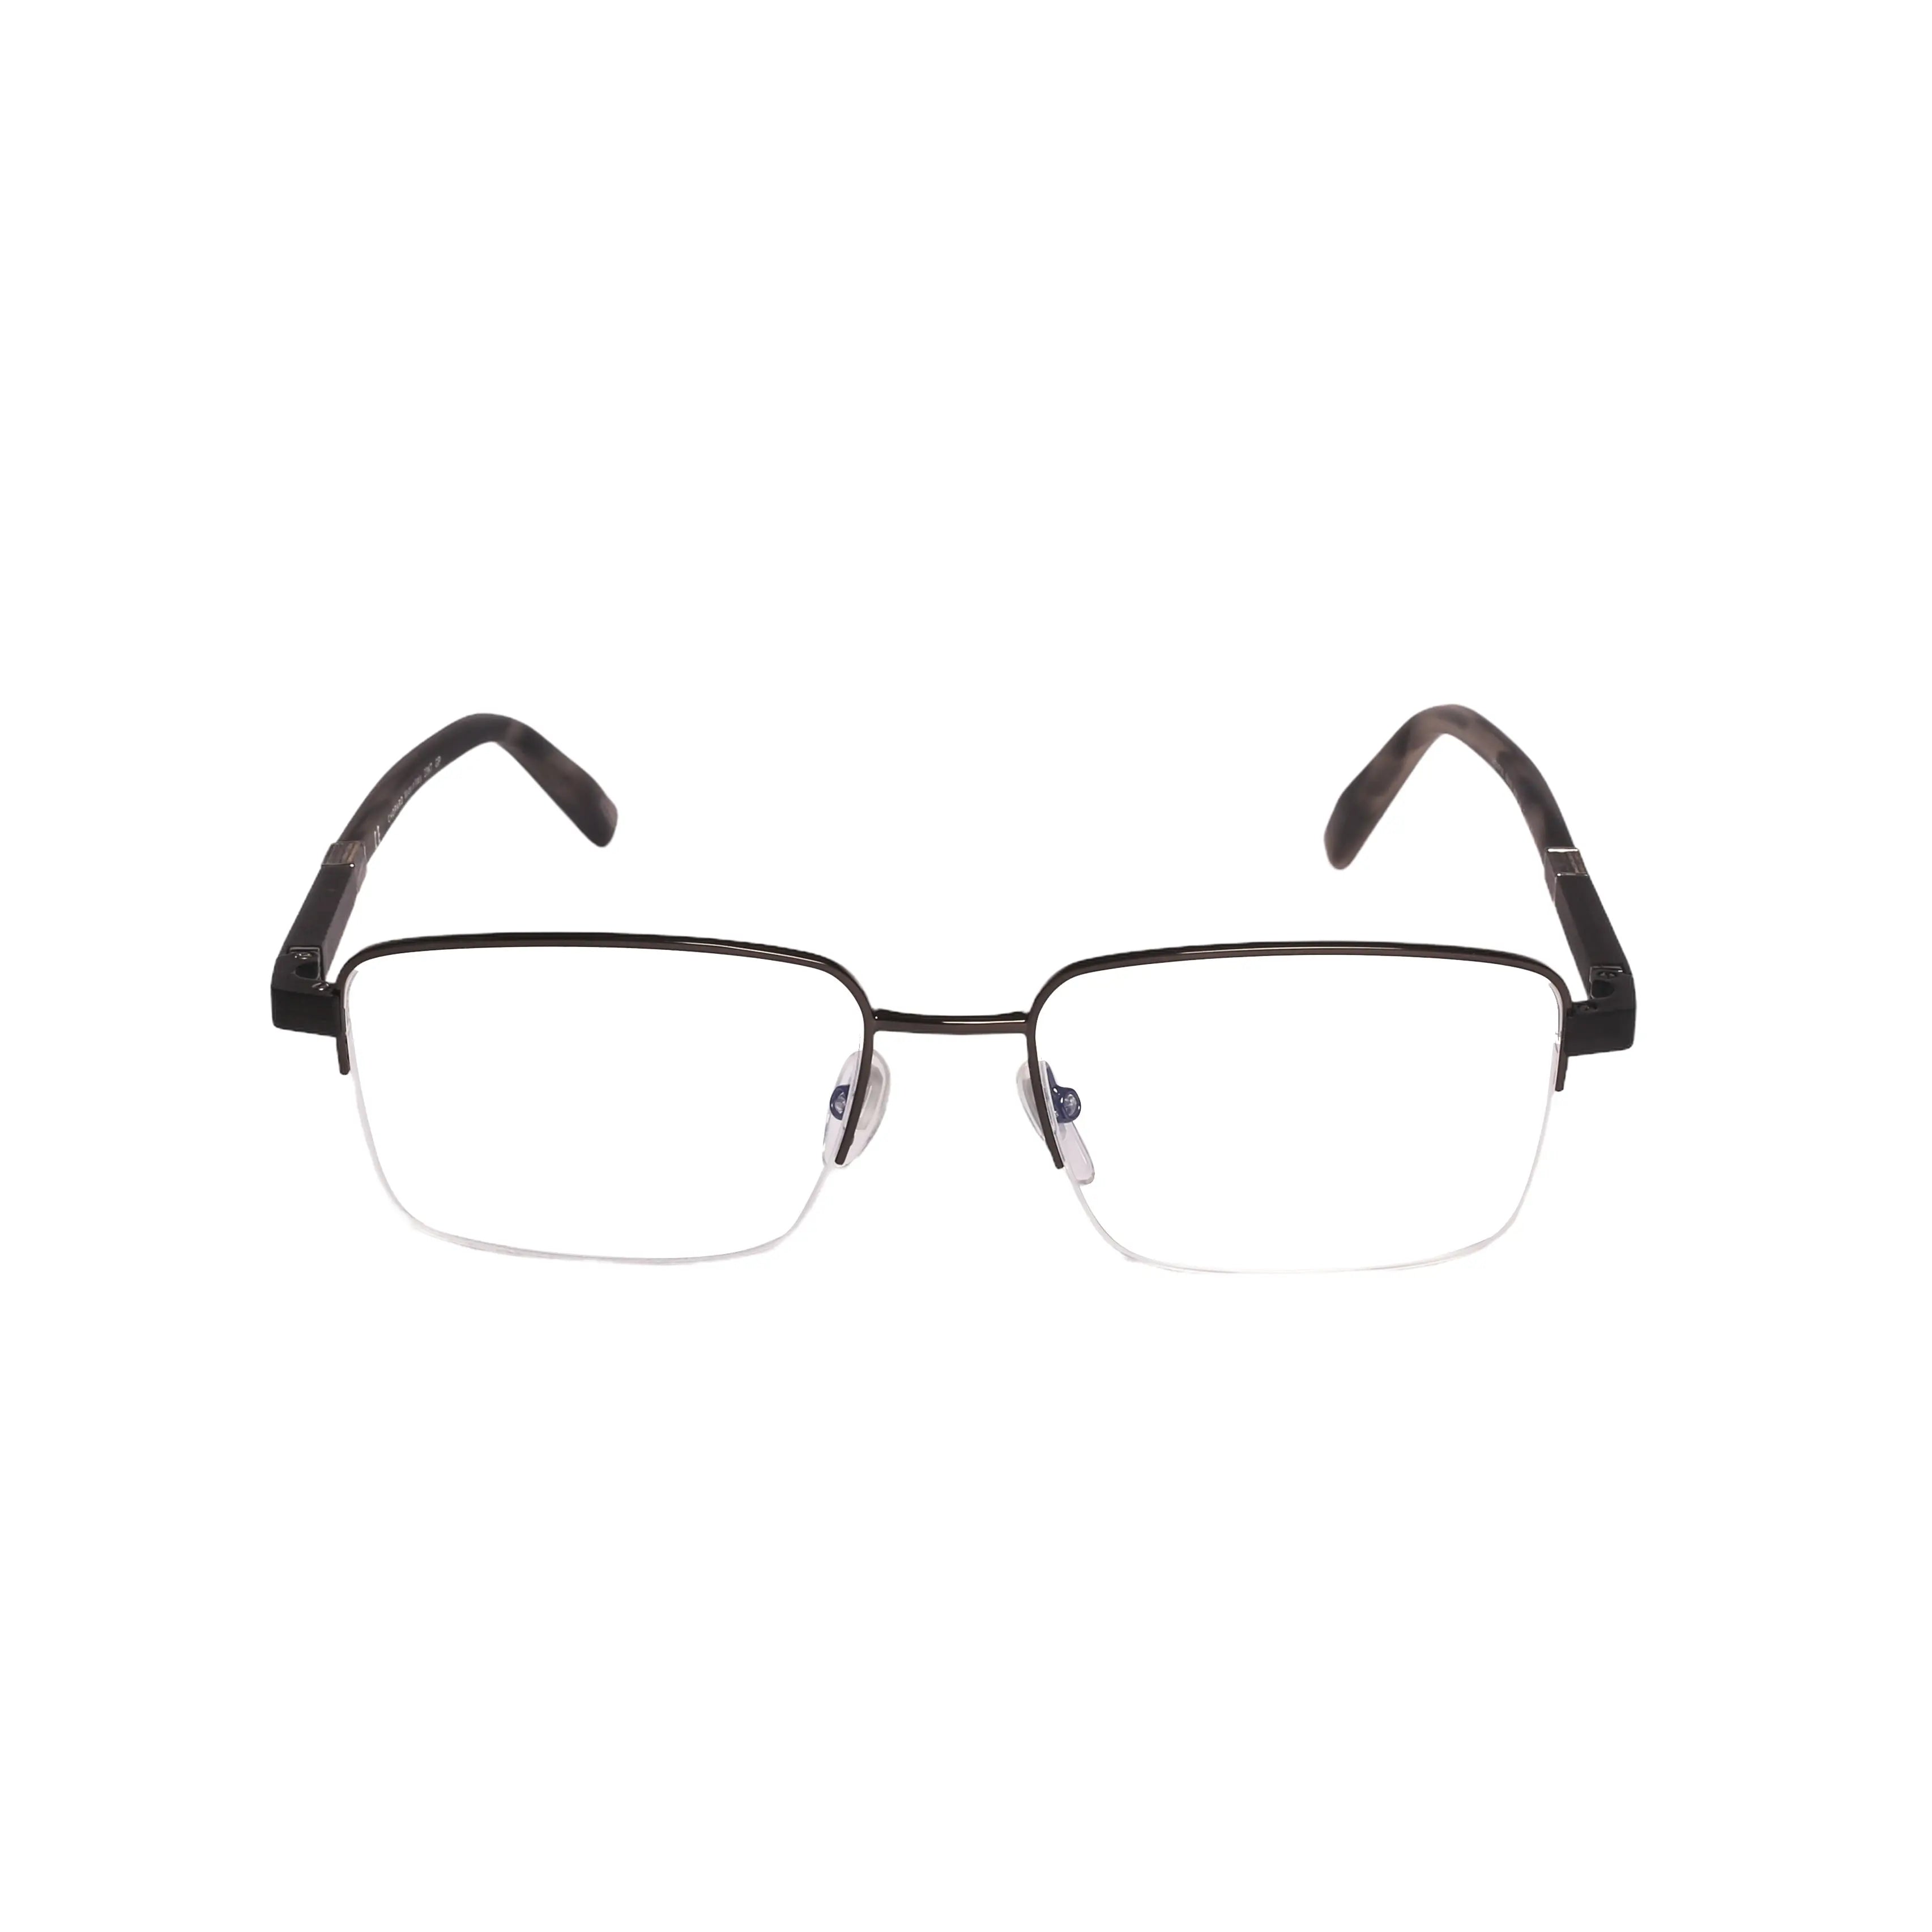 CHOPARD-VCHF 55-56-568 Eyeglasses - Premium Eyeglasses from Chopard - Just Rs. 44000! Shop now at Laxmi Opticians